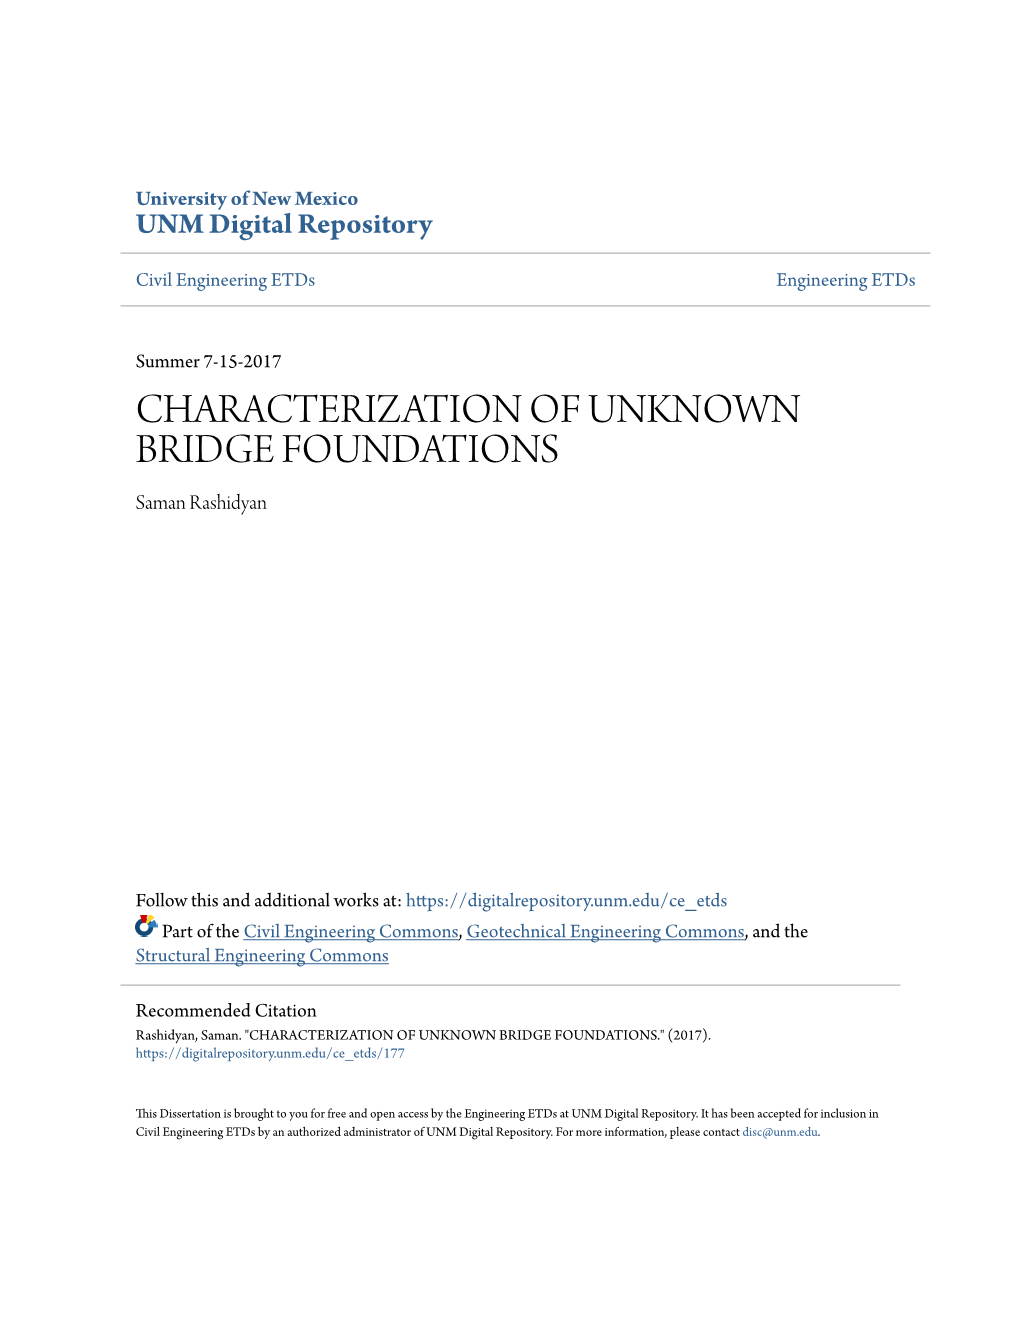 CHARACTERIZATION of UNKNOWN BRIDGE FOUNDATIONS Saman Rashidyan